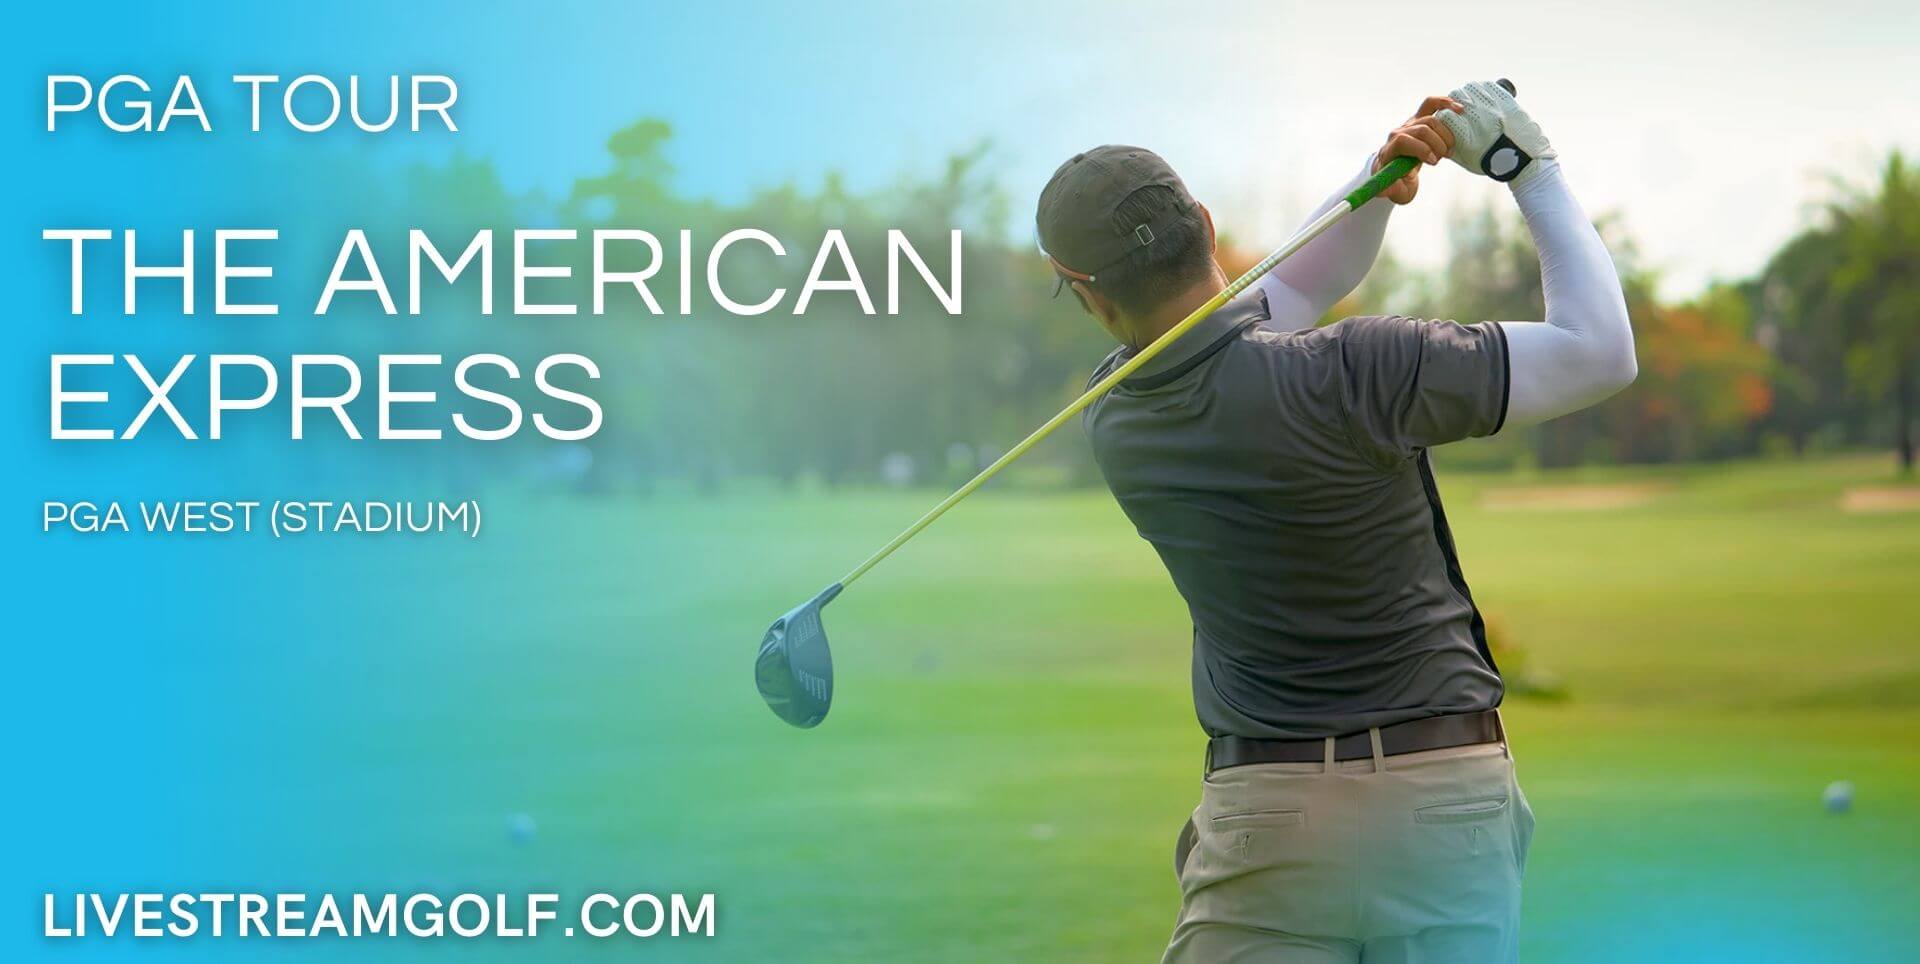 The American Express PGA Live Stream